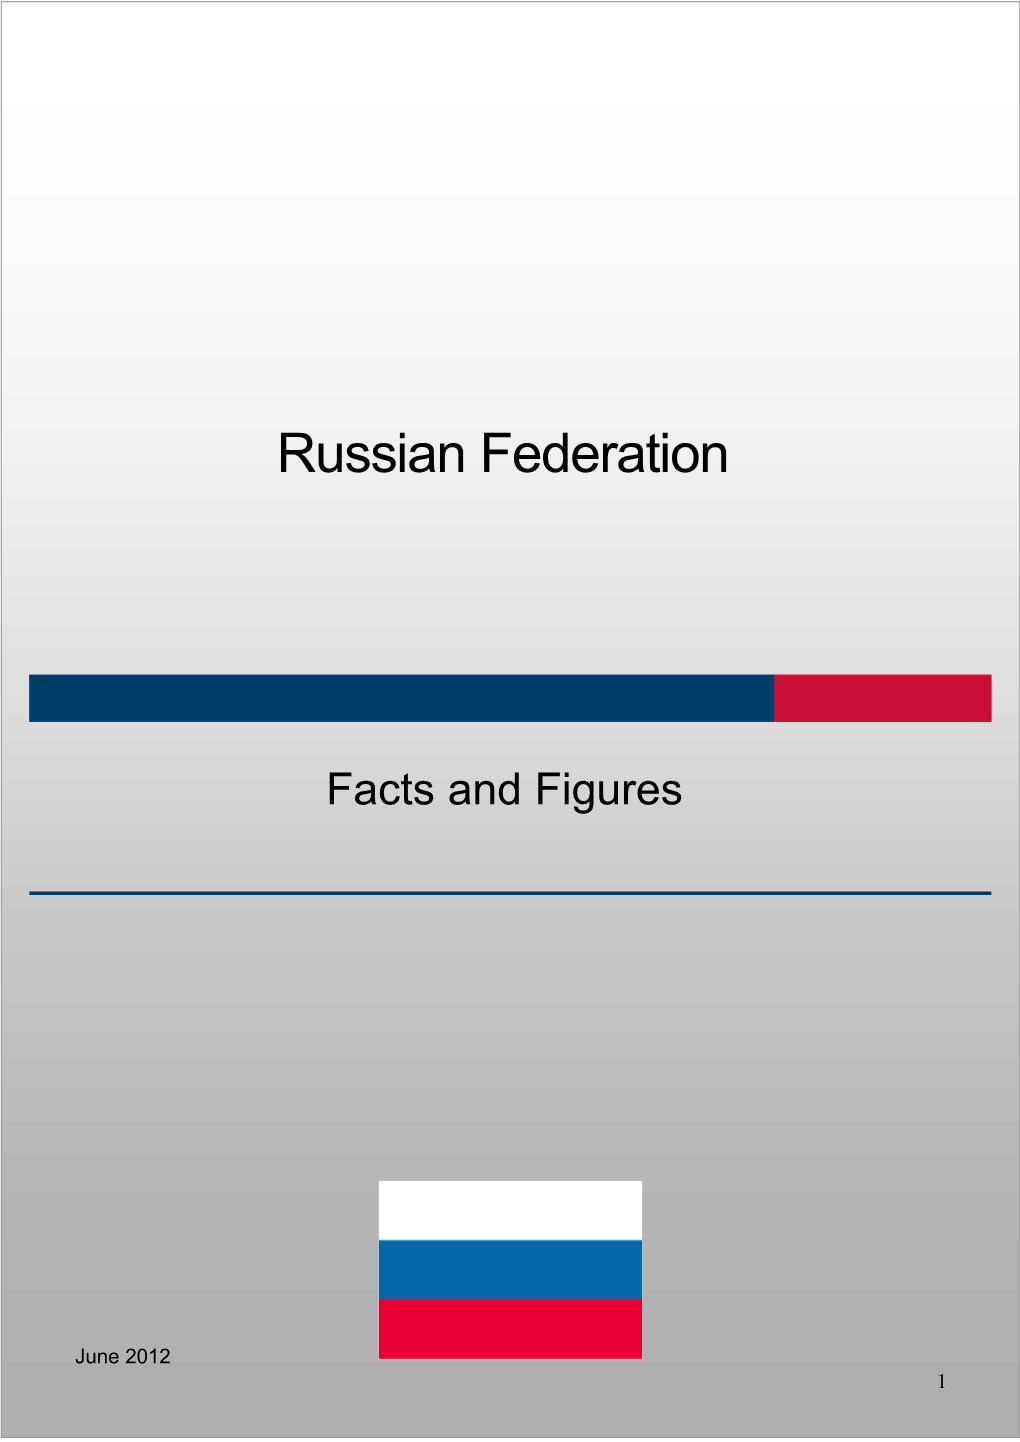 Russian Federation Keygeographicaldata